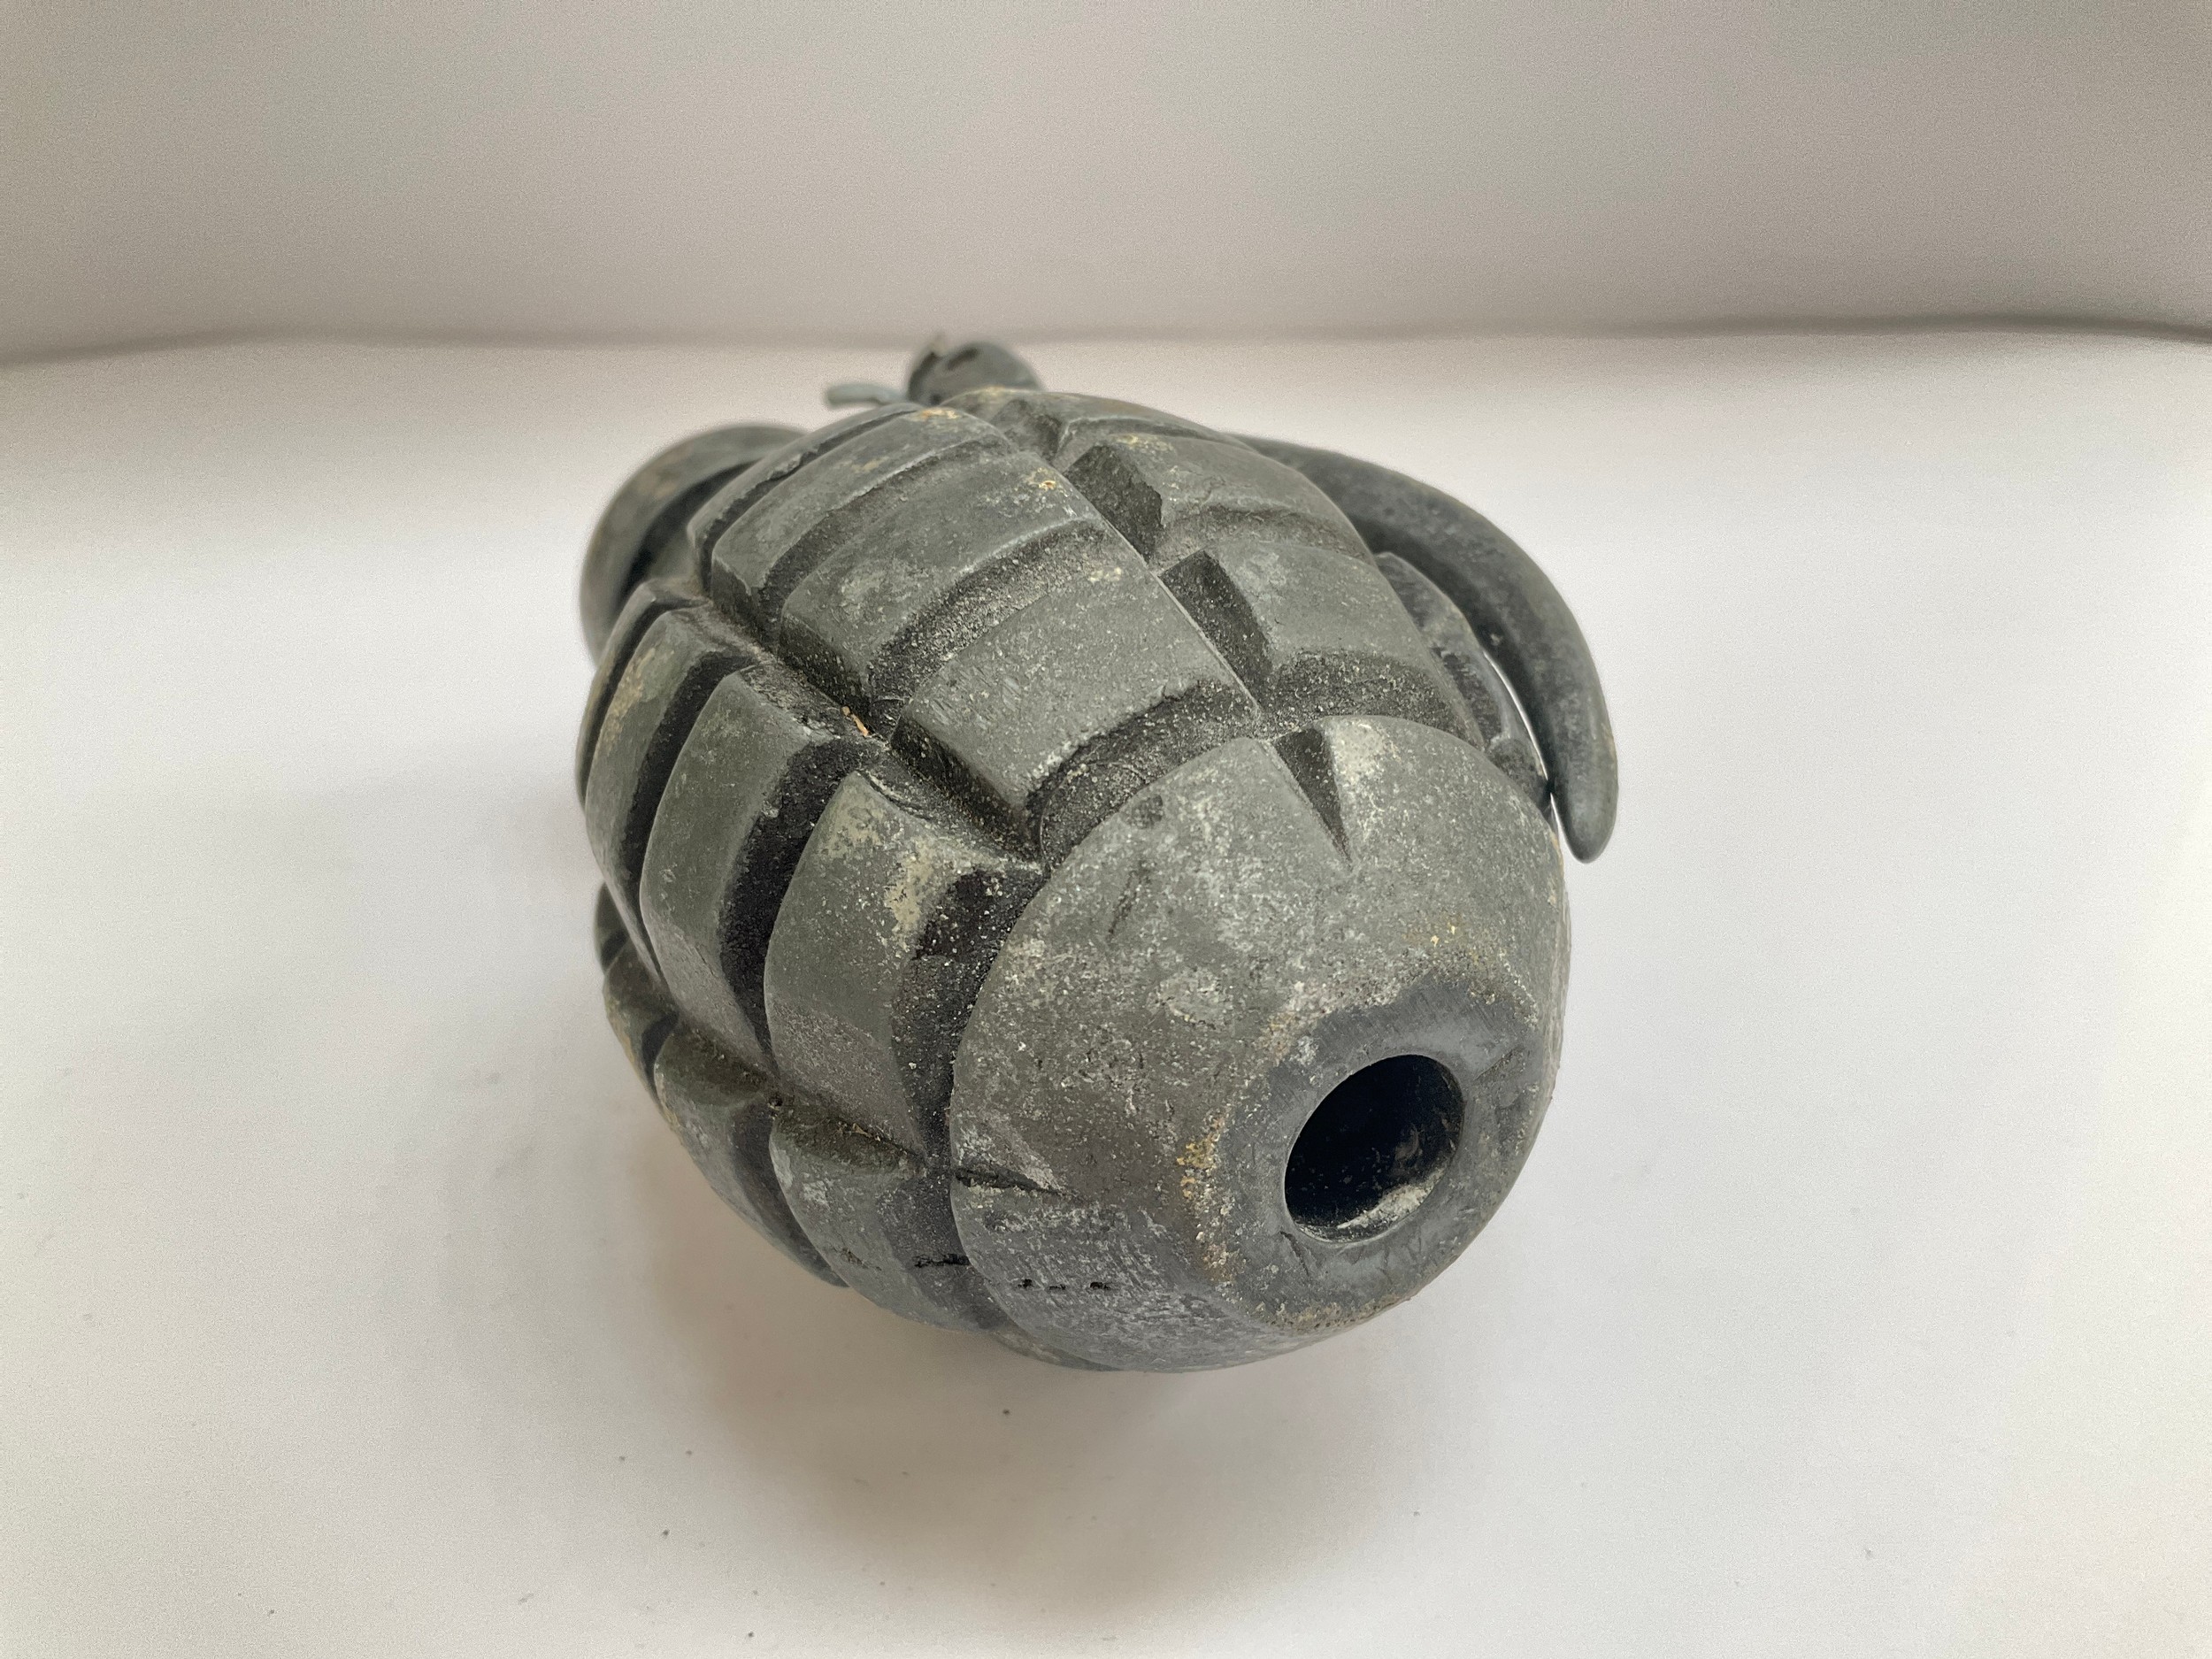 A USAF dummy training grenade, inert - Image 2 of 2